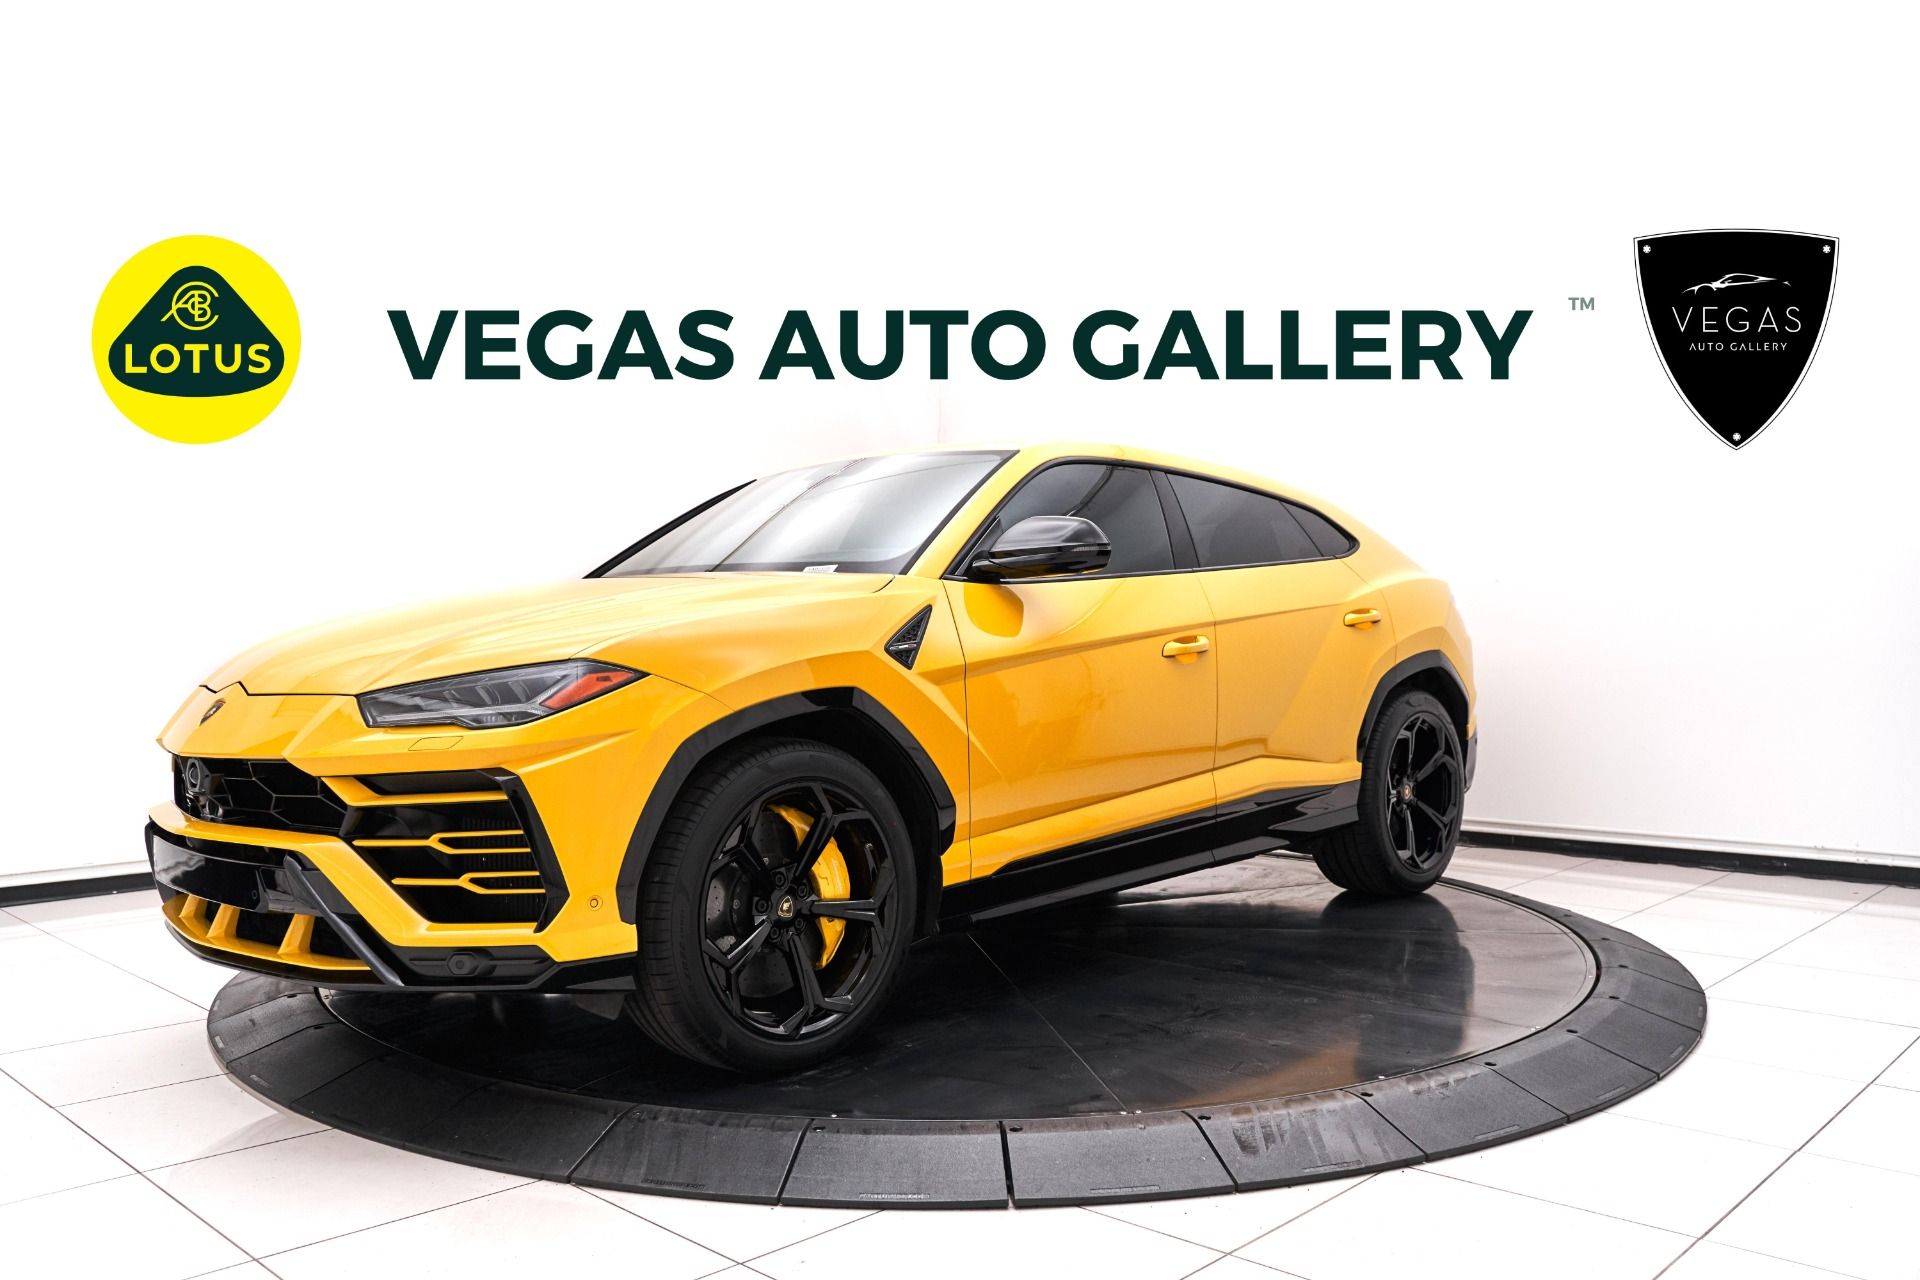 Vegas Otomobil Galerisi'nden Lamborghini SUV